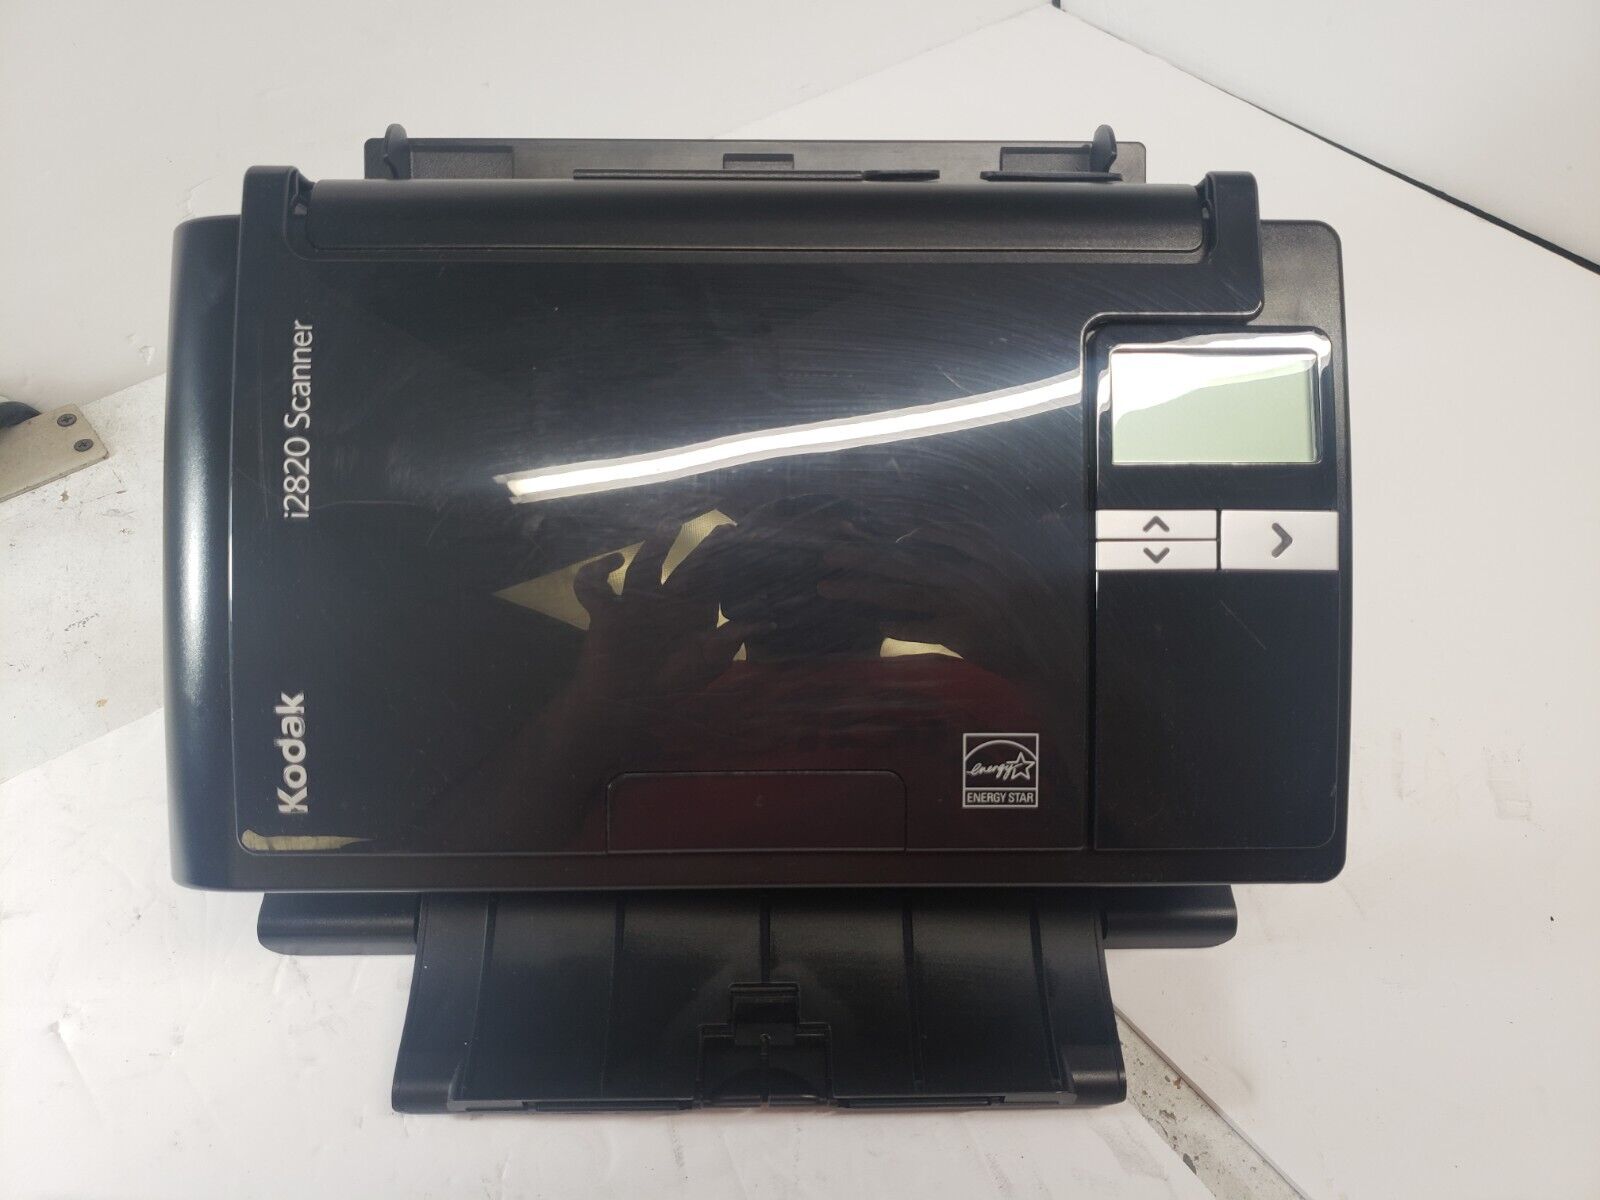 Kodak i2820 Sheet-fed Document Scanner, 300dpi - No Power Adapter